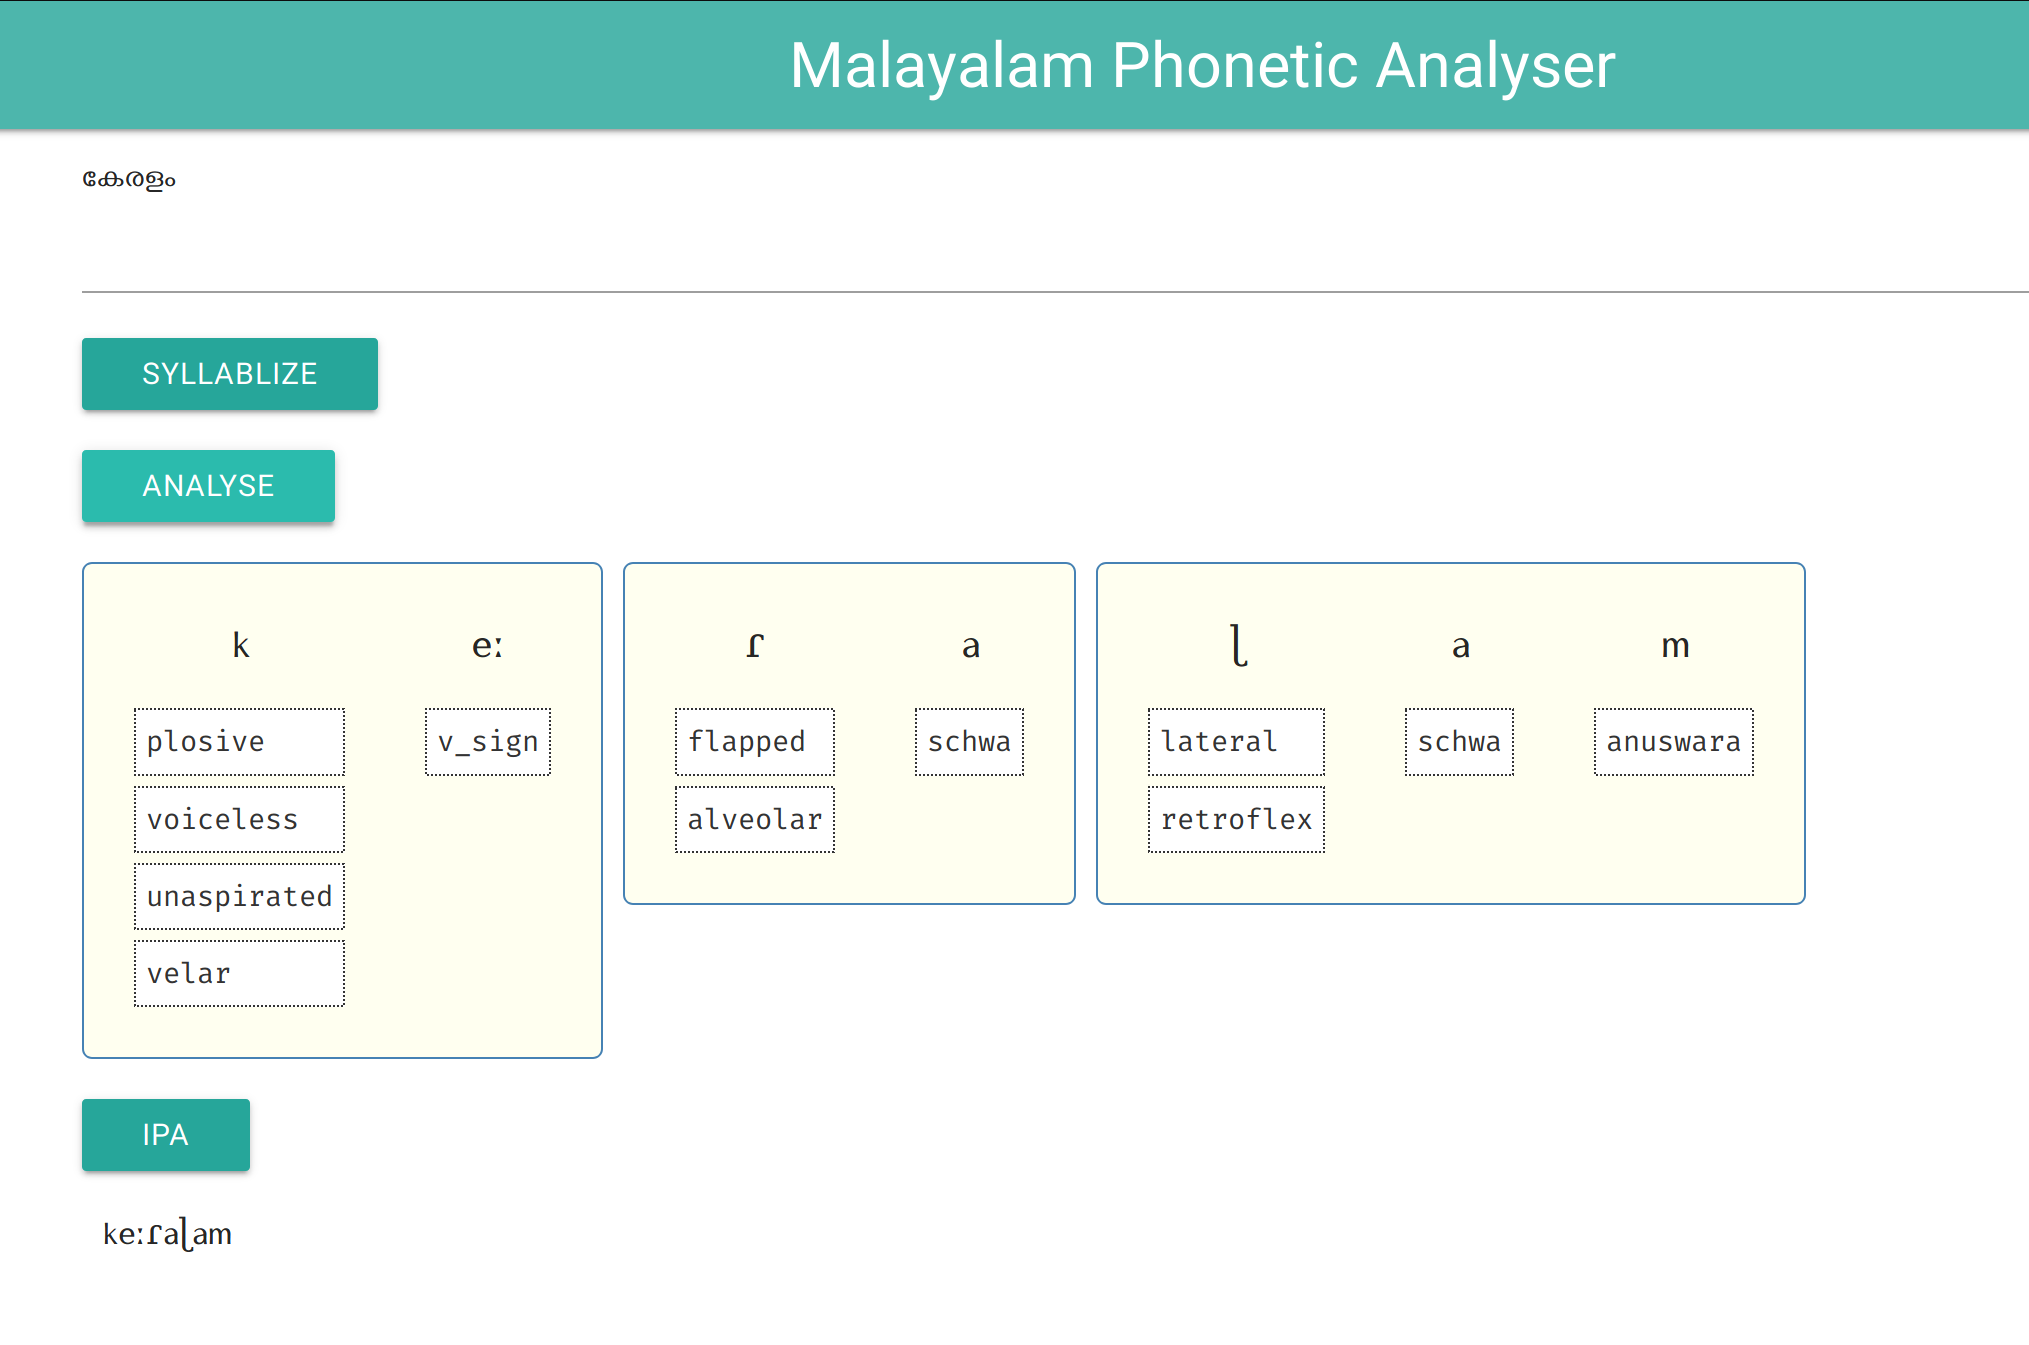 Phonetic description of Malayalam consonants